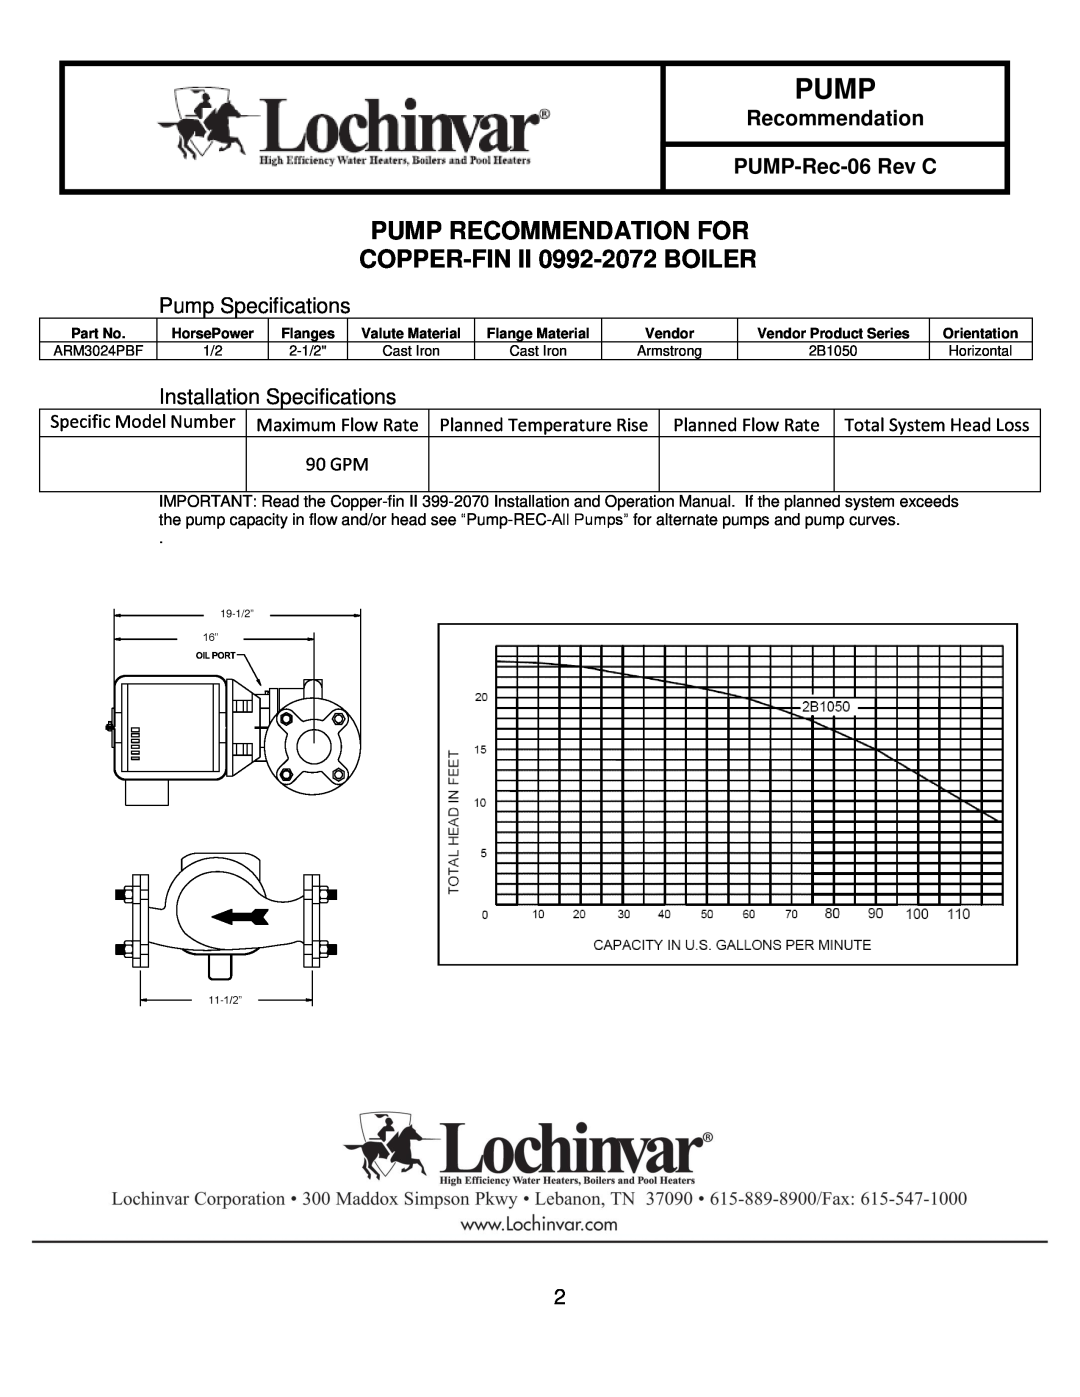 Lochinvar 0402-0752 PUMP RECOMMENDATION FOR COPPER-FIN II 0992-2072 BOILER, 90 GPM, Pump, Recommendation PUMP-Rec-06 Rev C 